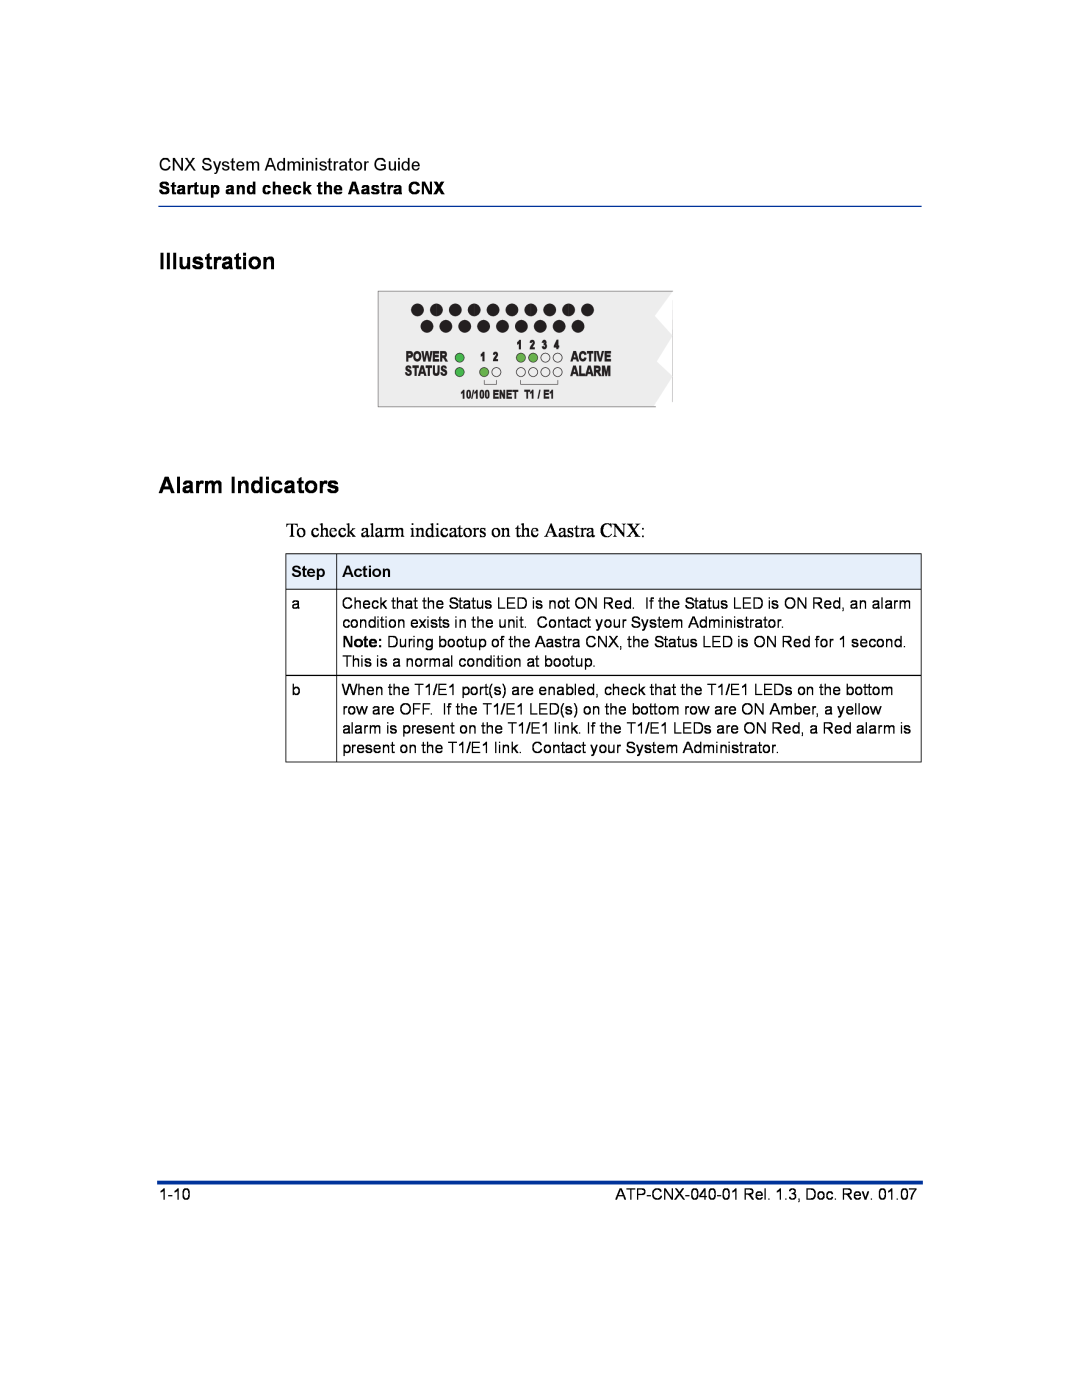 Aastra Telecom ATP-CNX-040-01 manual Alarm Indicators, Illustration, CNX System Administrator Guide, Step Action 